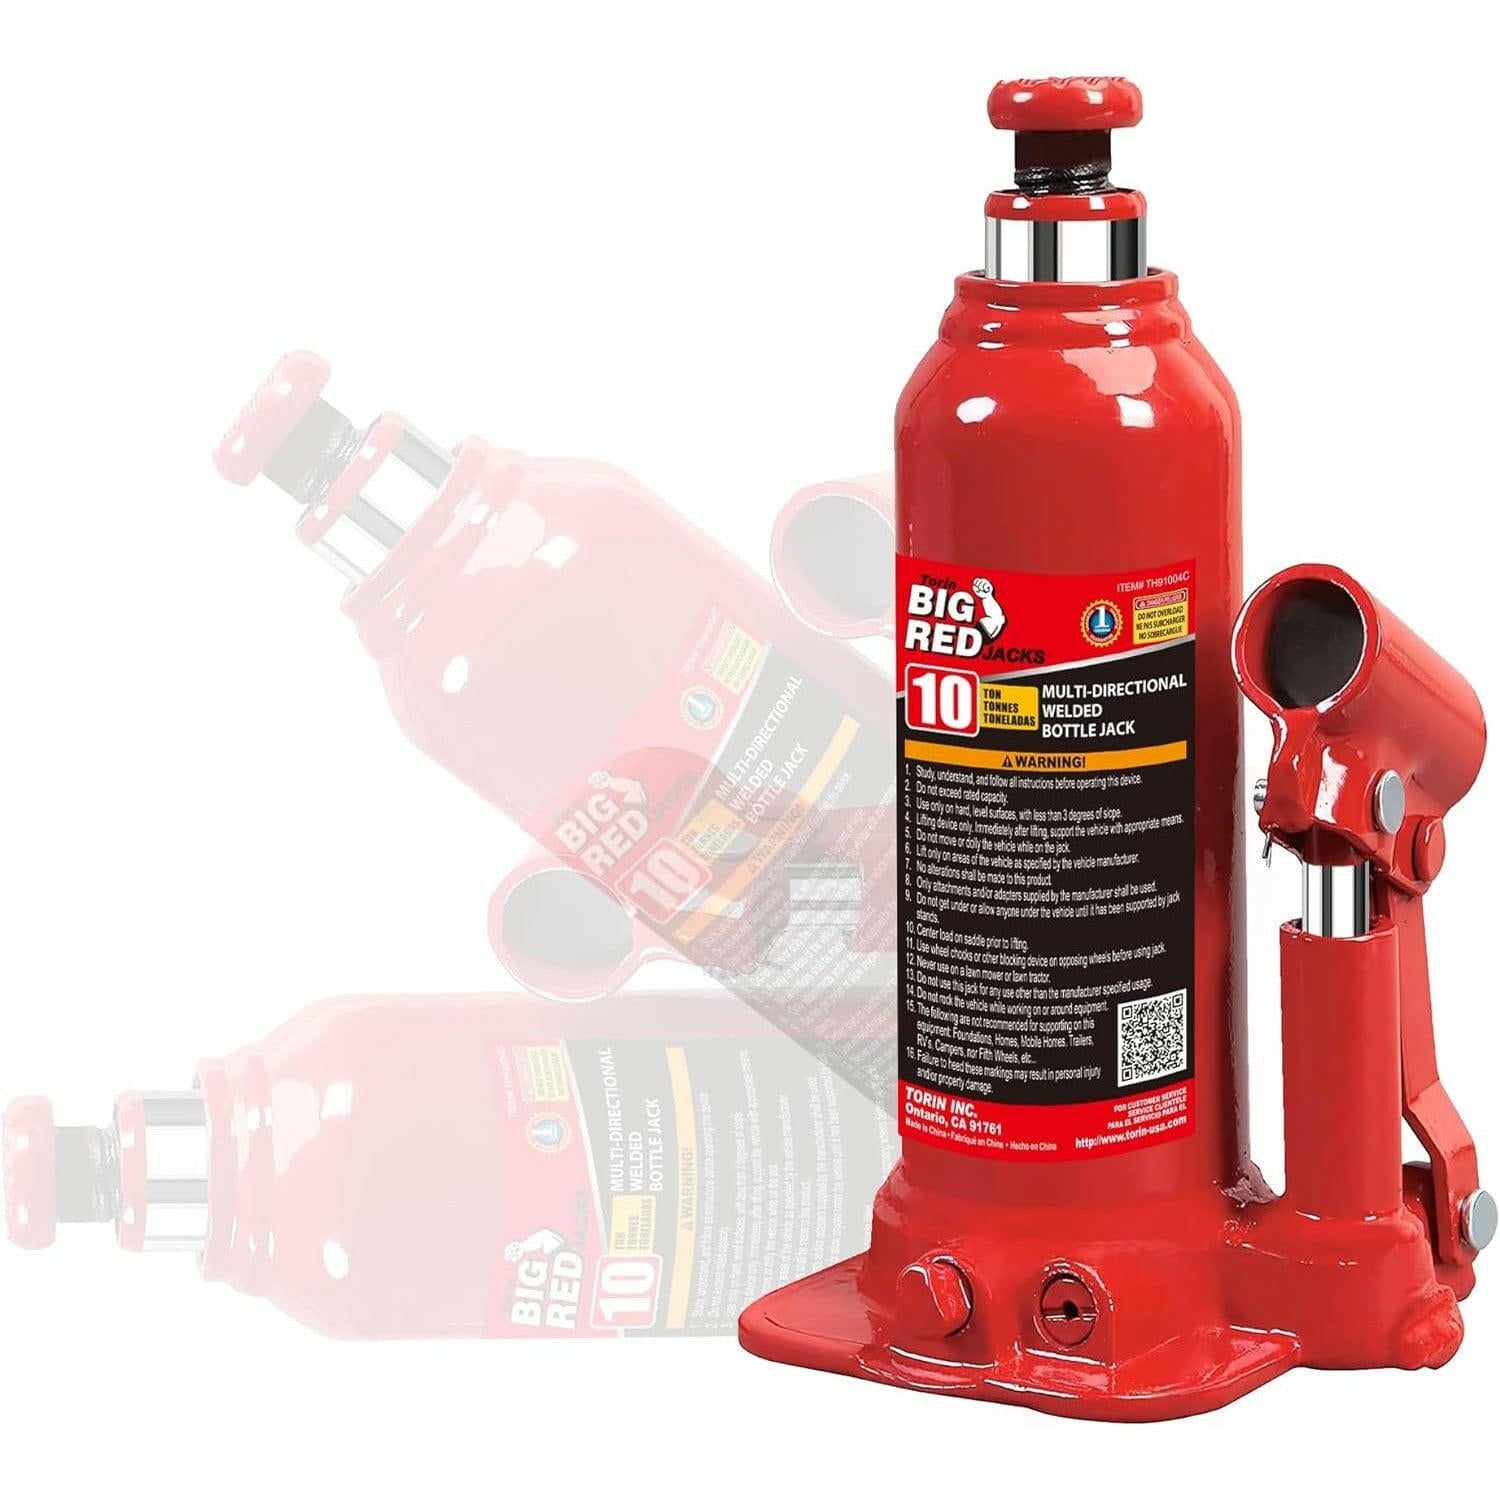 big-red-10-ton-multi-directional-bottle-jack